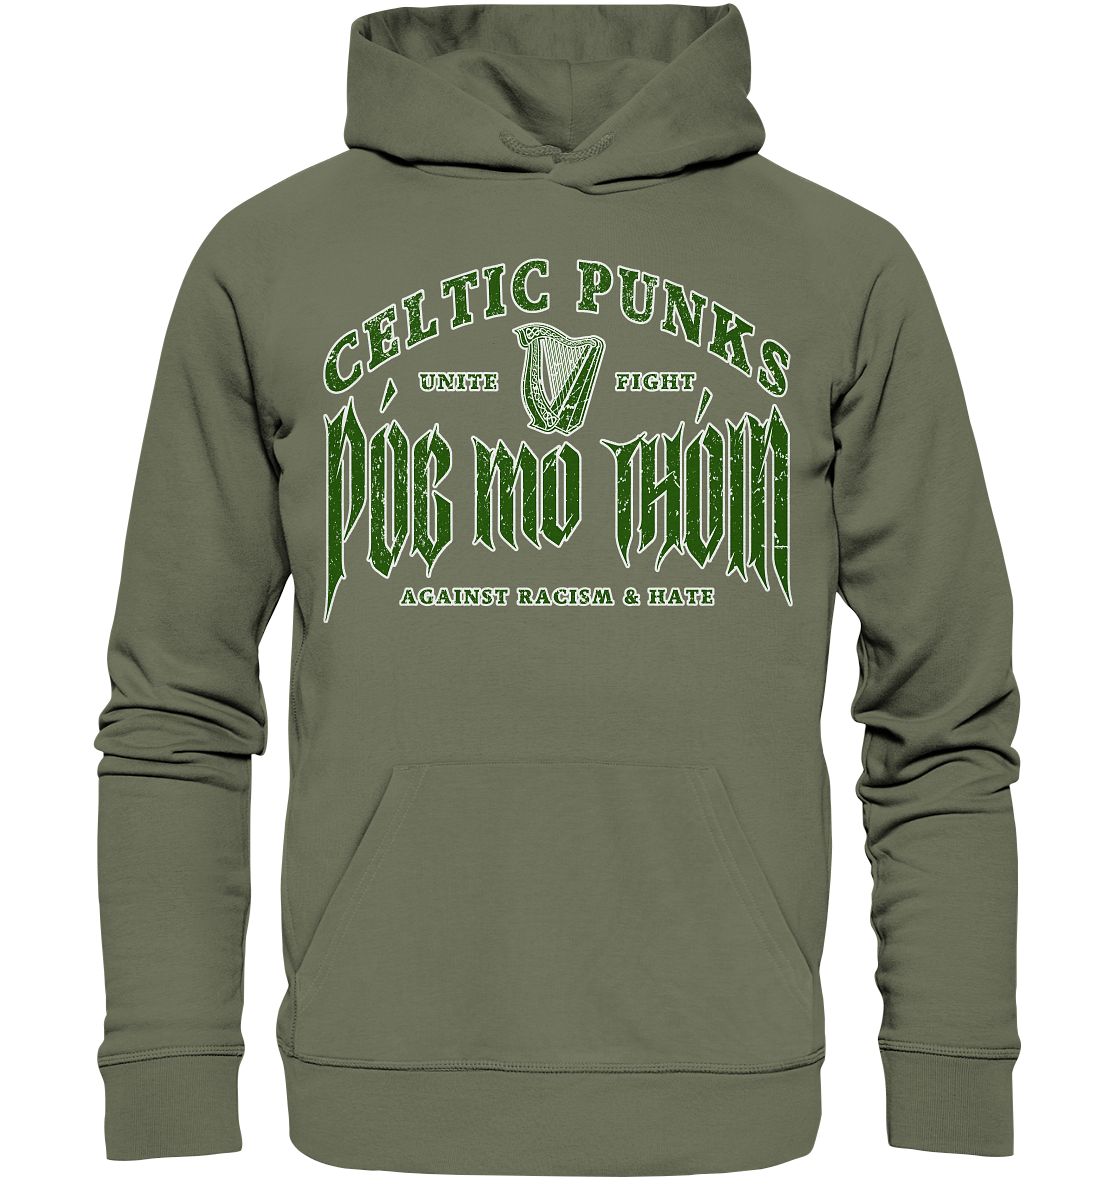 Póg Mo Thóin Streetwear "Celtic Punks Against Racism & Hate / Unite & Fight" - Premium Unisex Hoodie